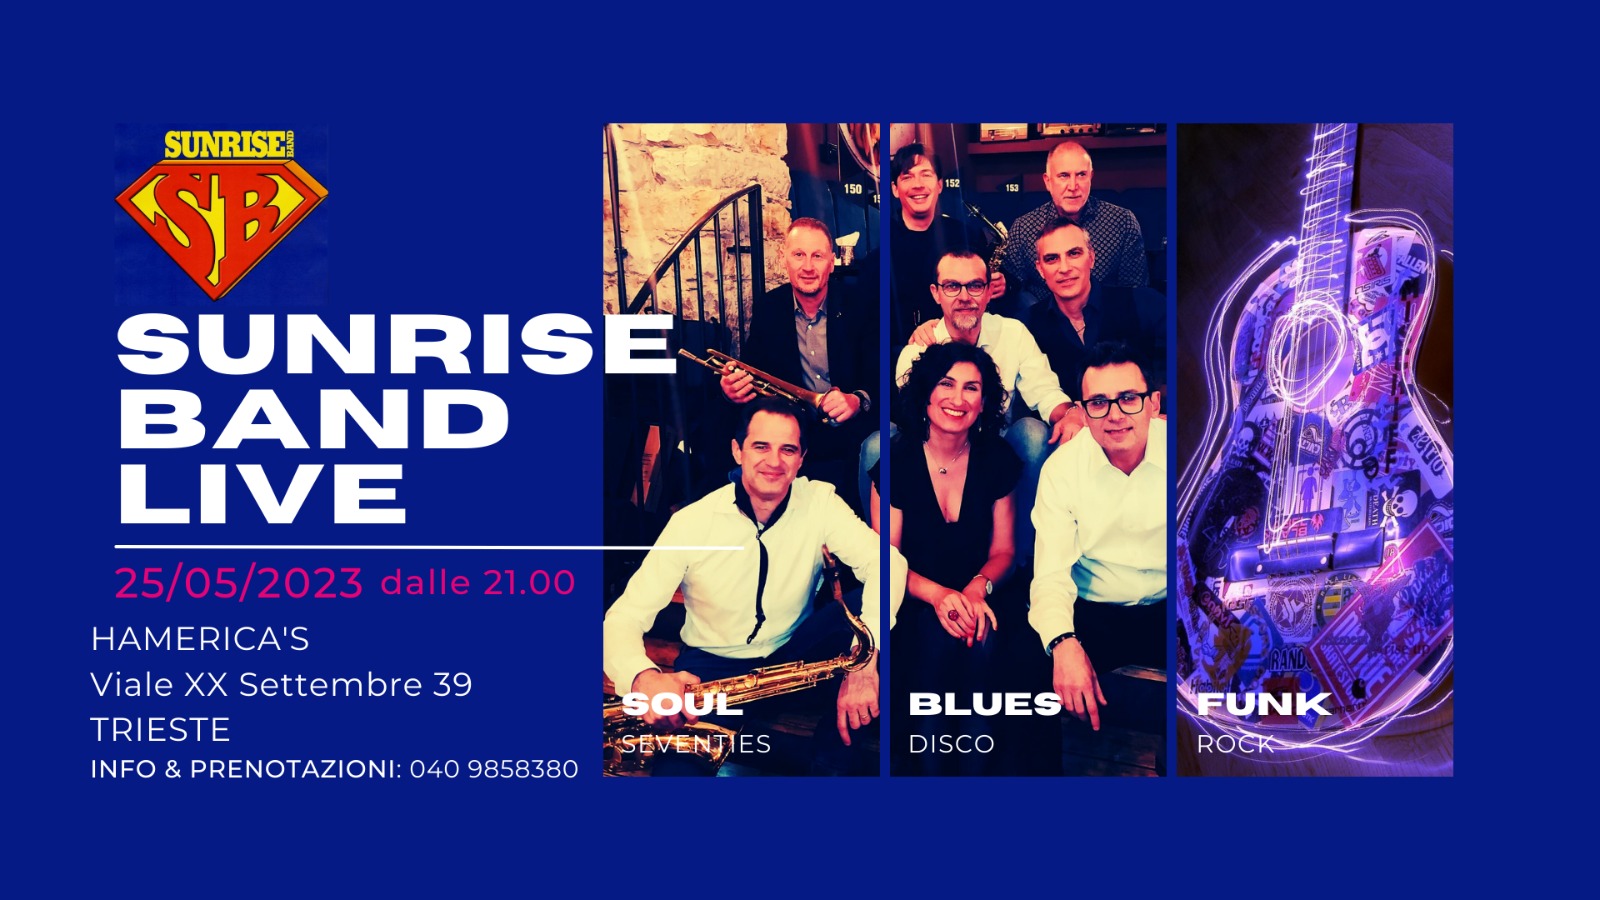 Sunrise band live, Hamerica's, Trieste